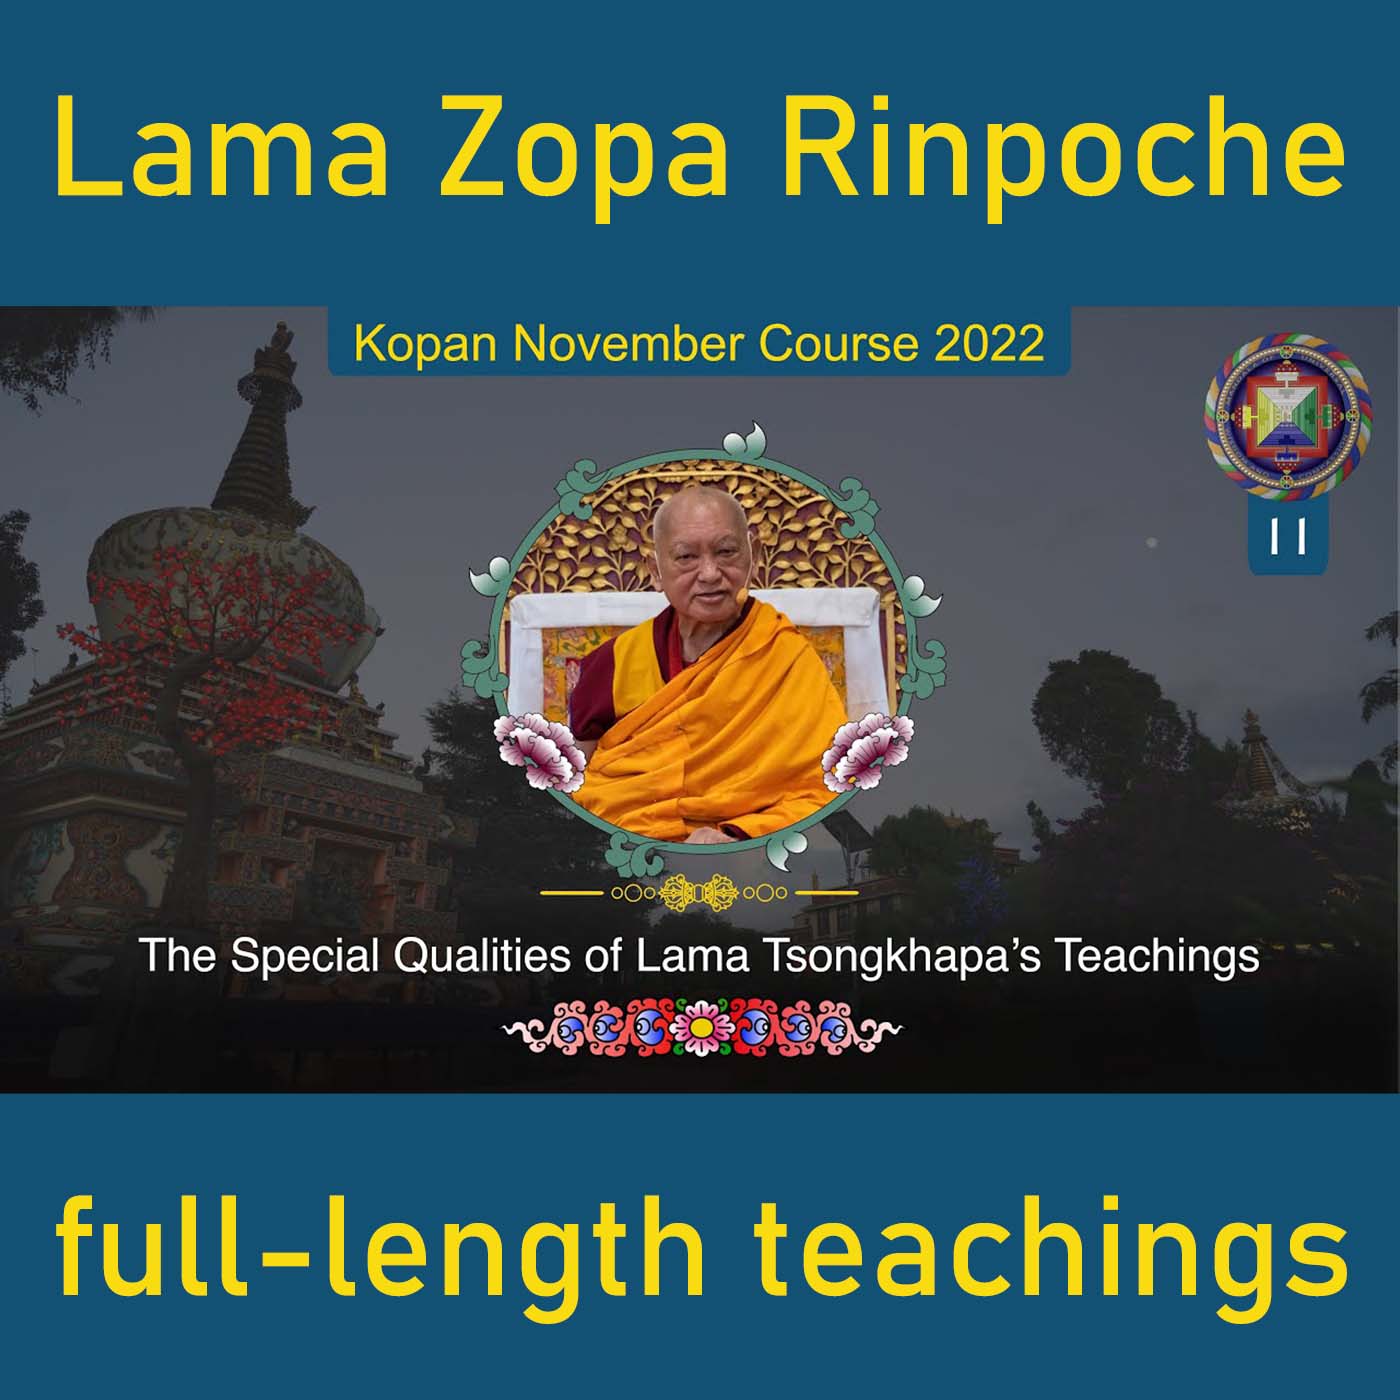 The Special Qualities of Lama Tsongkhapa’s Teachings